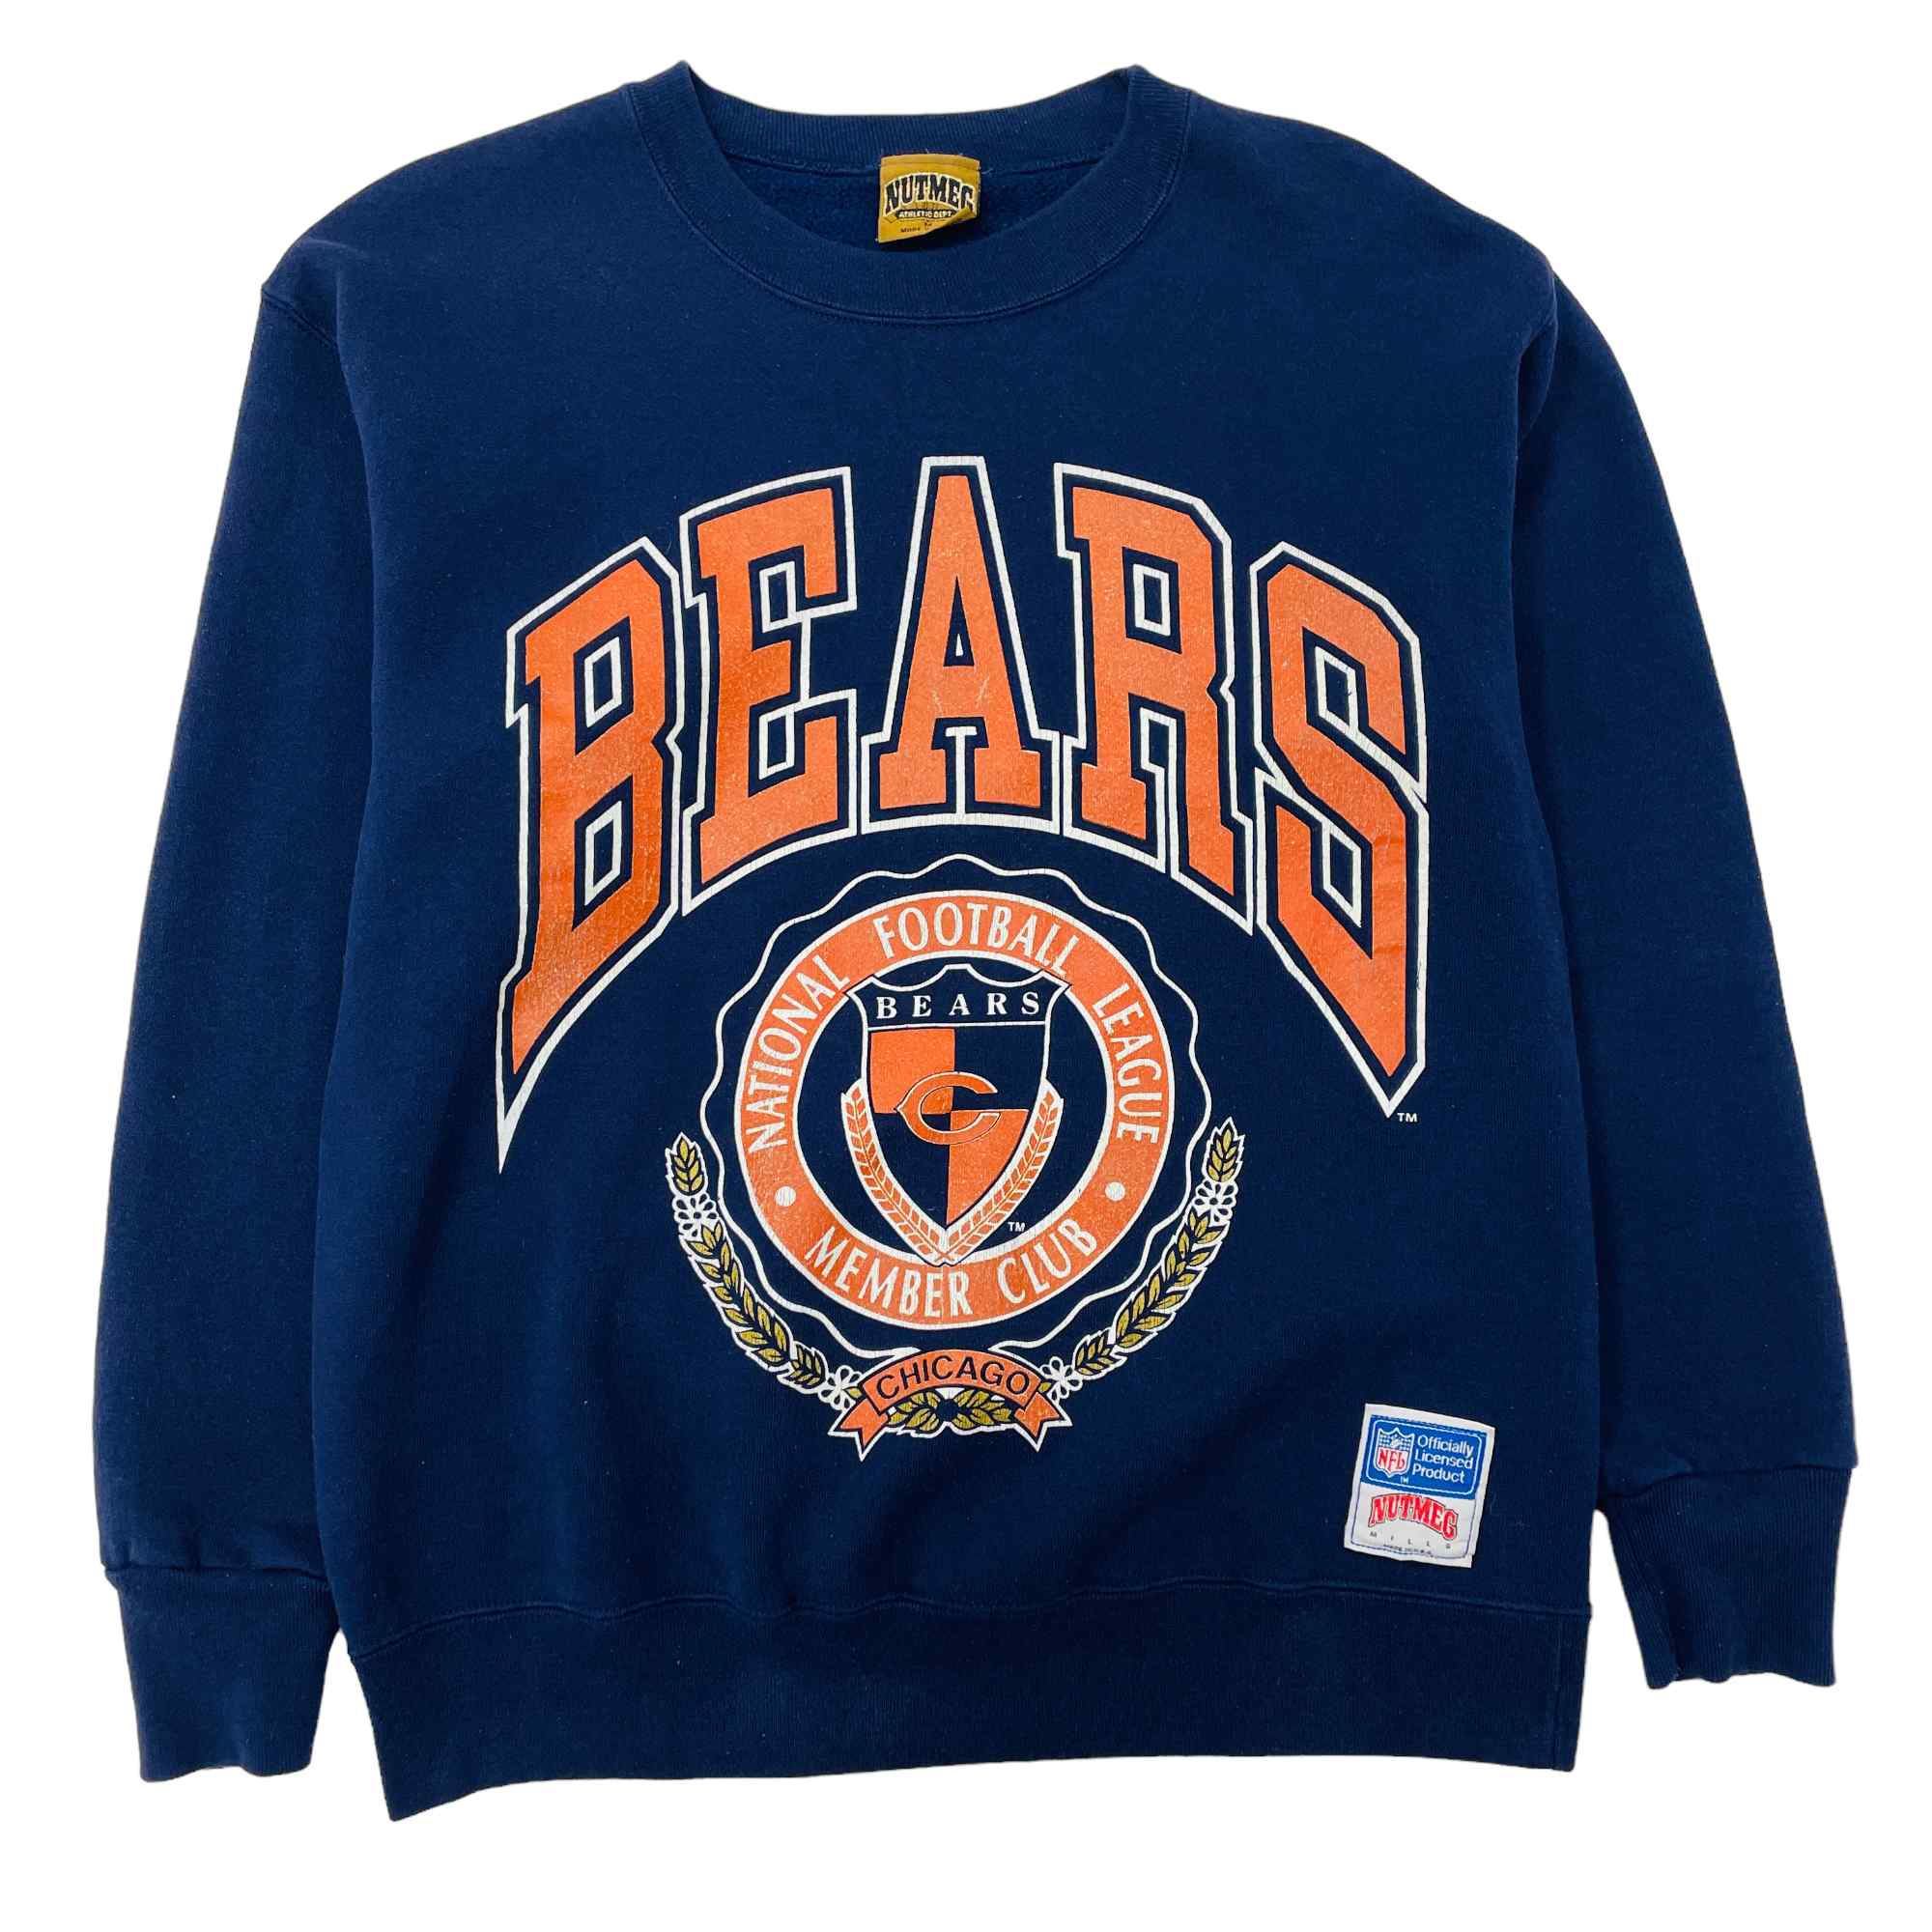 Chicago Bears NFL 'Members Club' Sweatshirt - Medium